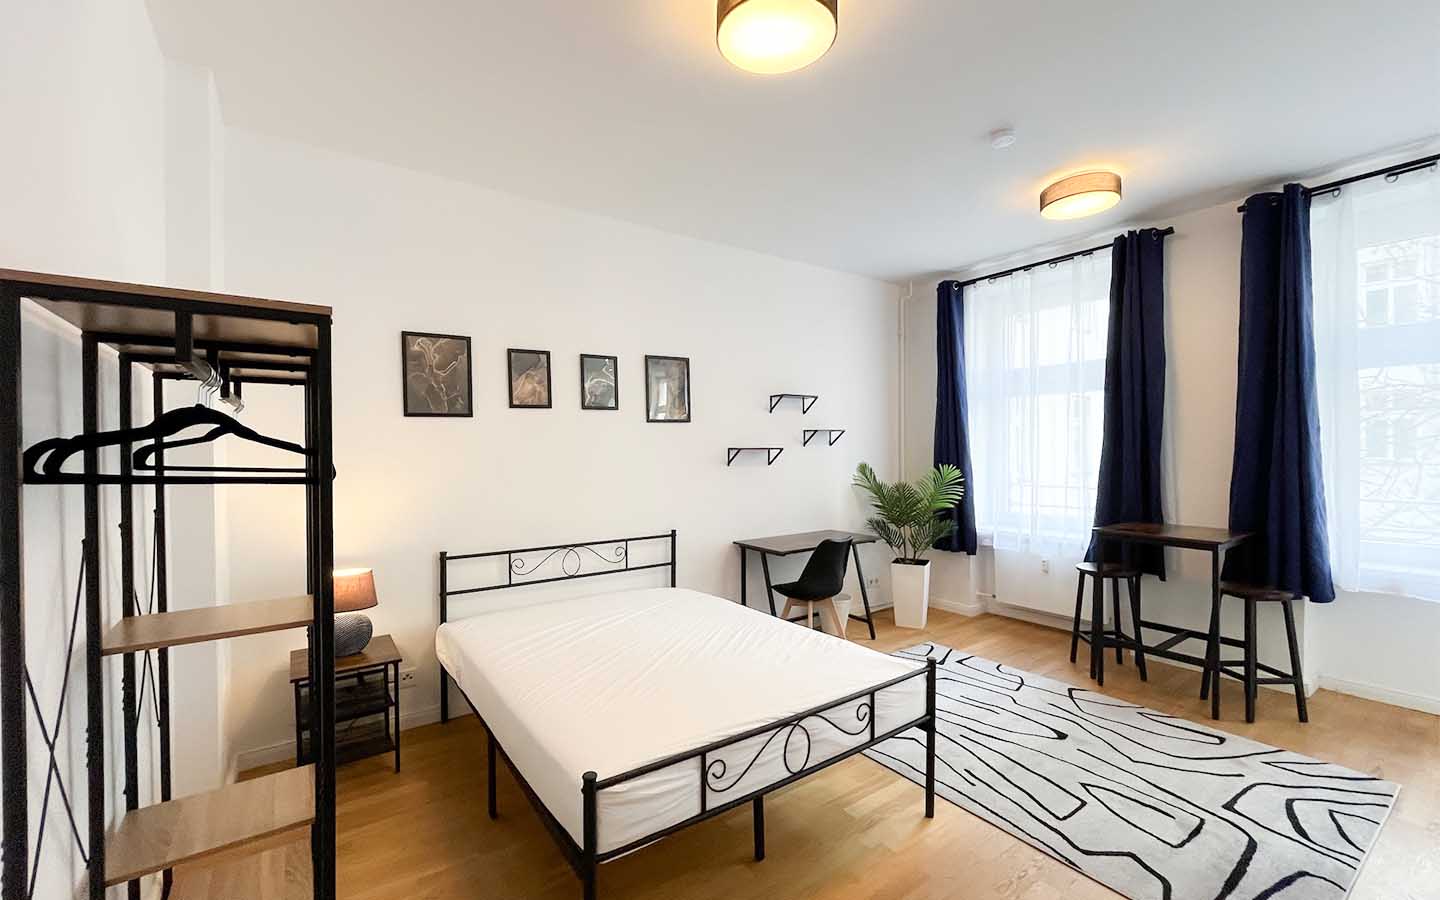 Cheap Studio Apartment for rent in Berlin